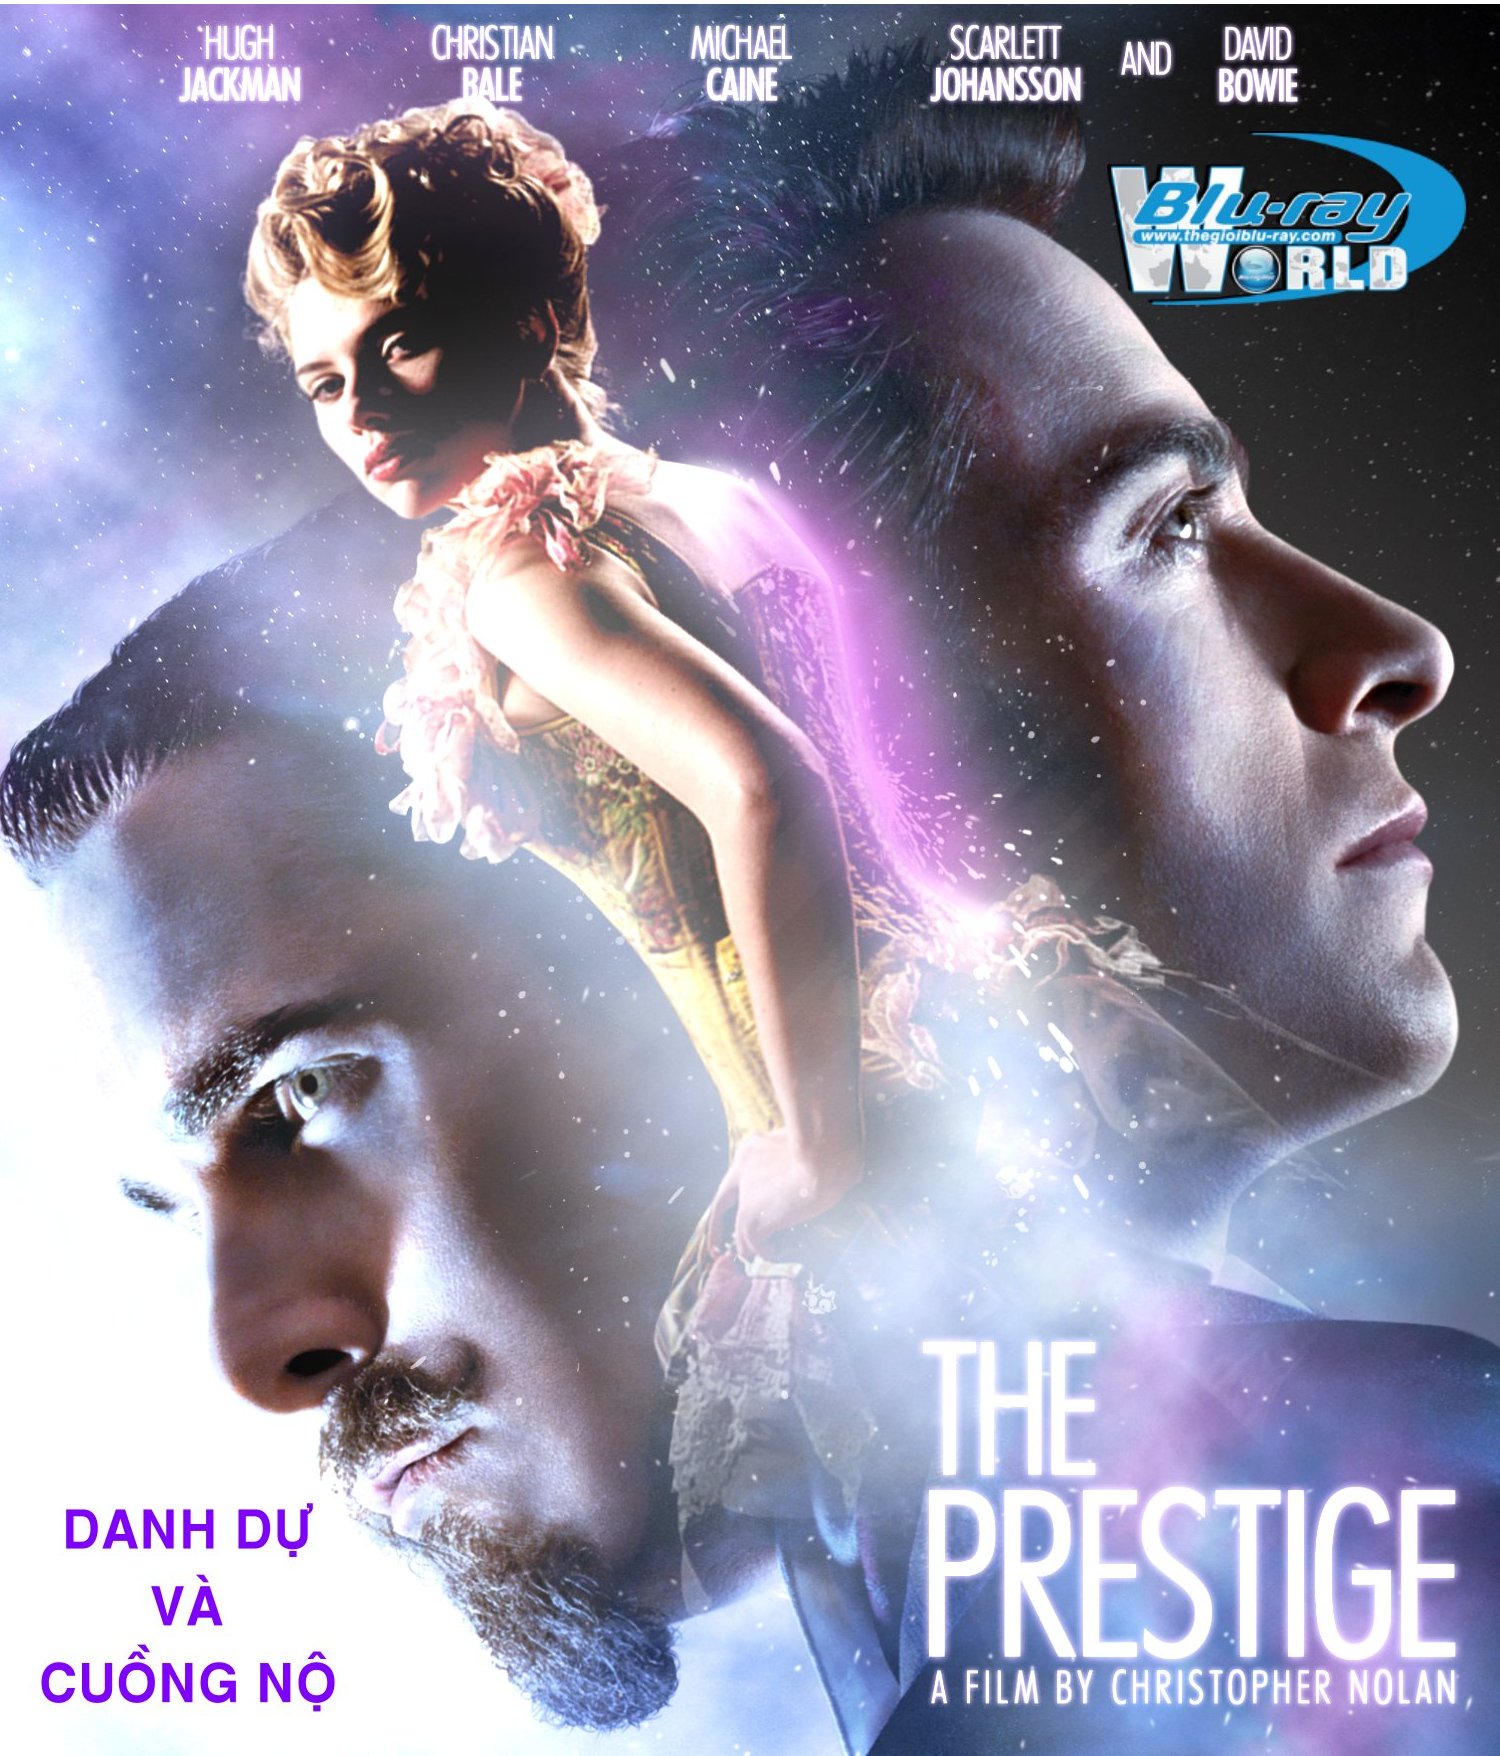 B1691. The Prestige - DANH DỰ VÀ CUỒNG NỘ 2D 25G (DTS-HD MA 5.1)